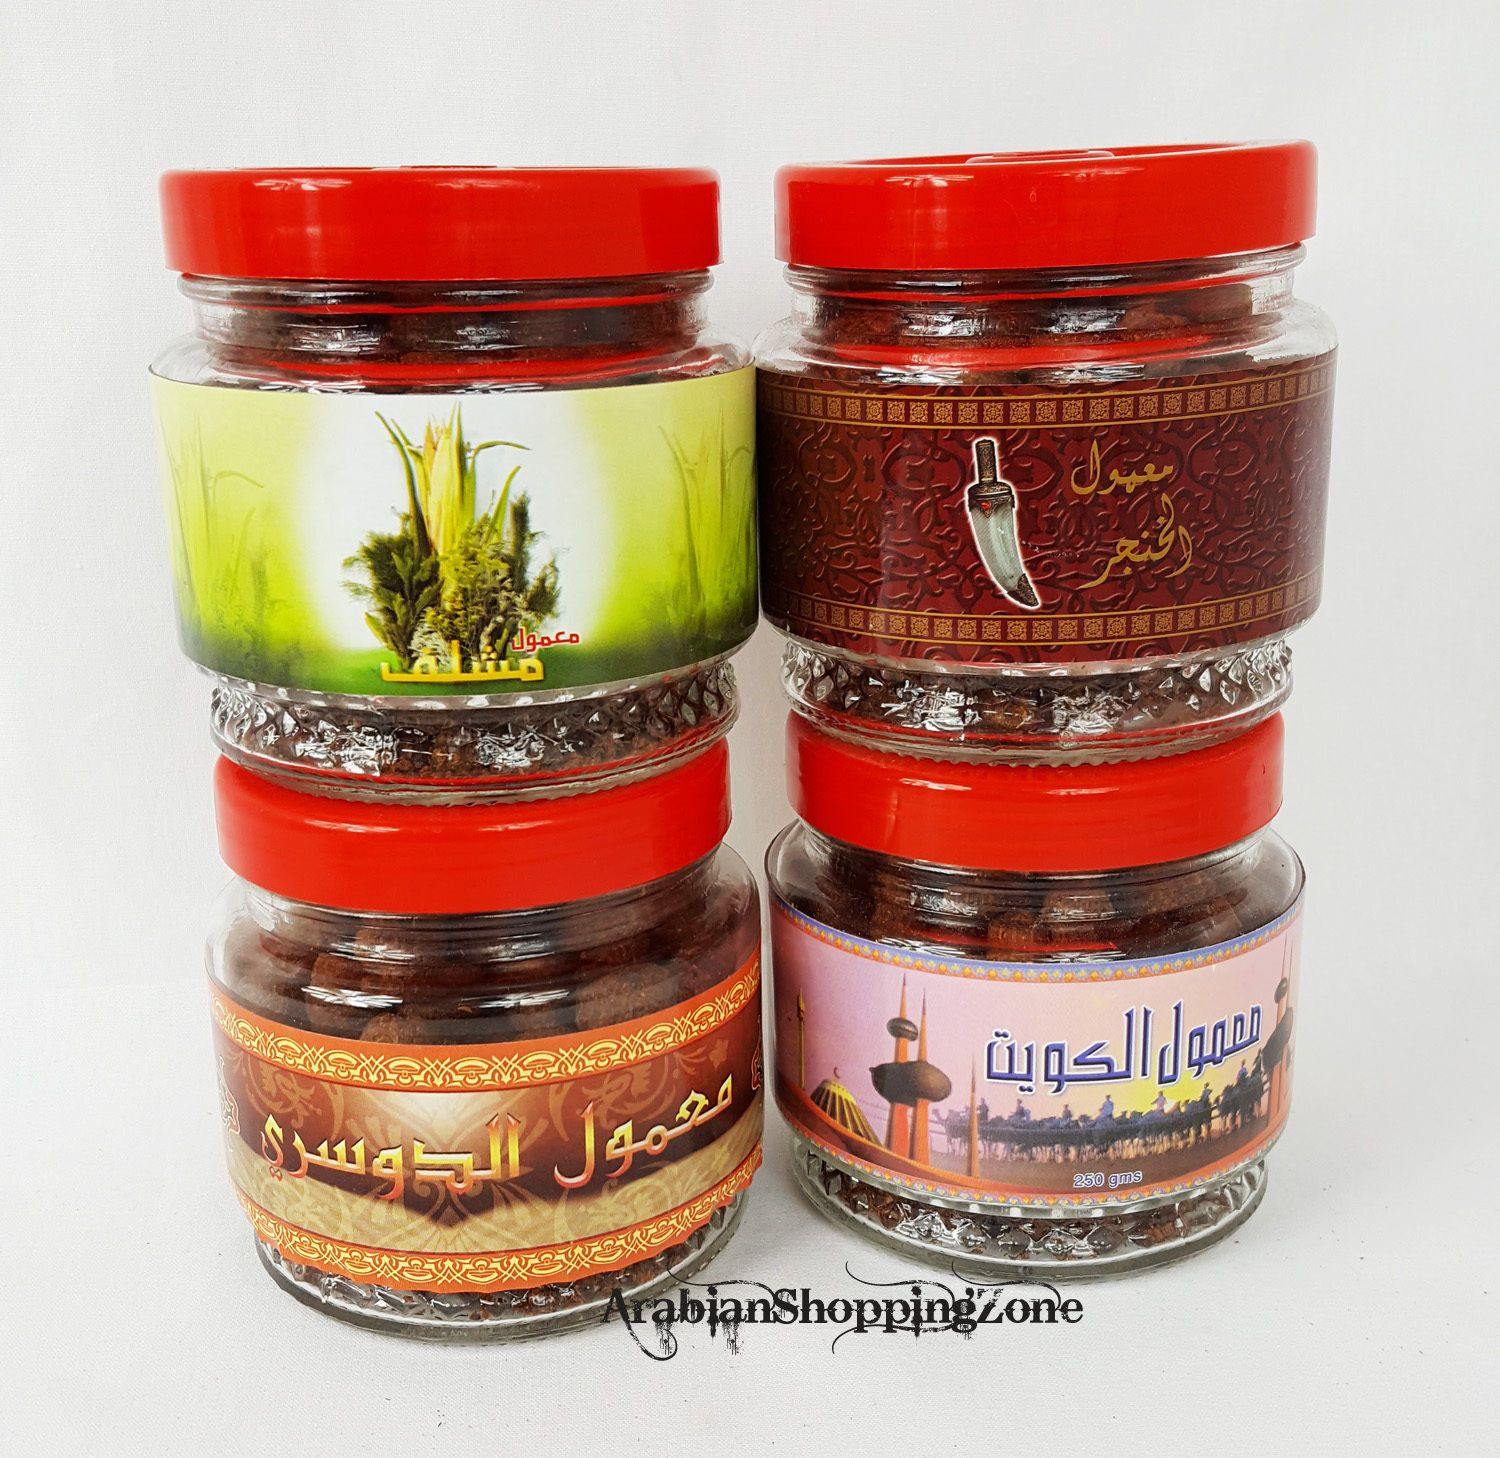 BANAFA Arab Incense BAKHOOR 50g - Arabian Shopping Zone